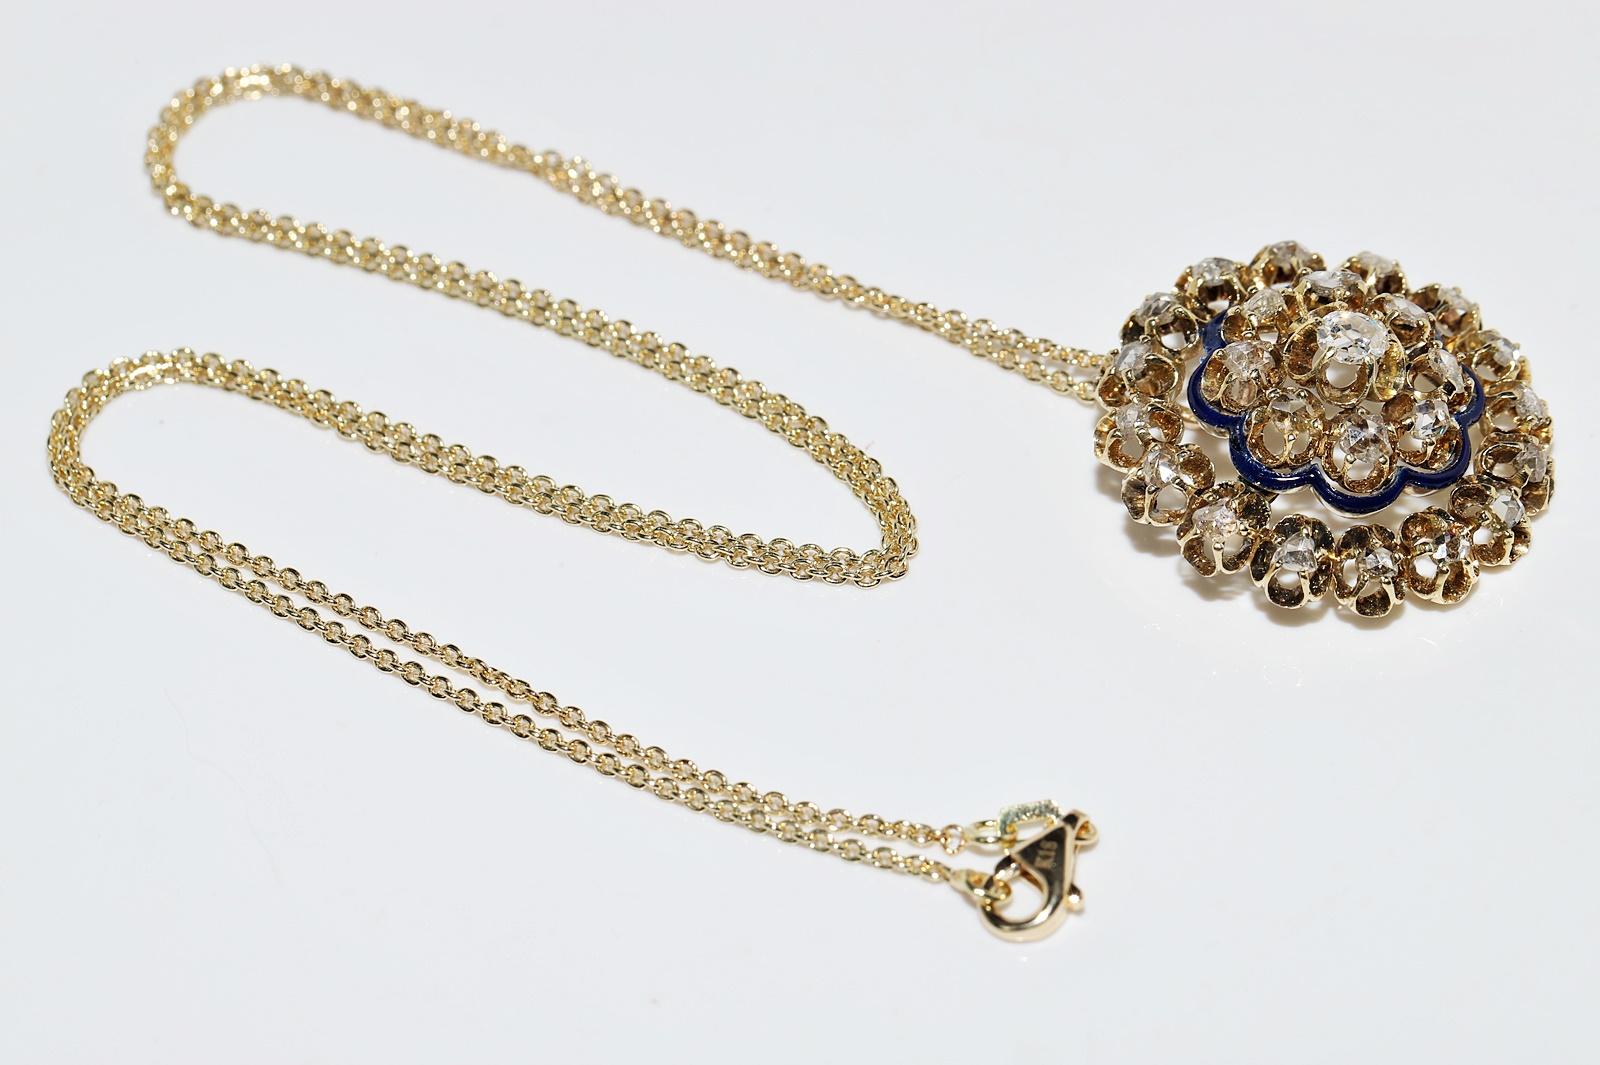 Antique Circa 1900s 18k Gold Natural Diamond And Enamel Pendant Necklace For Sale 12